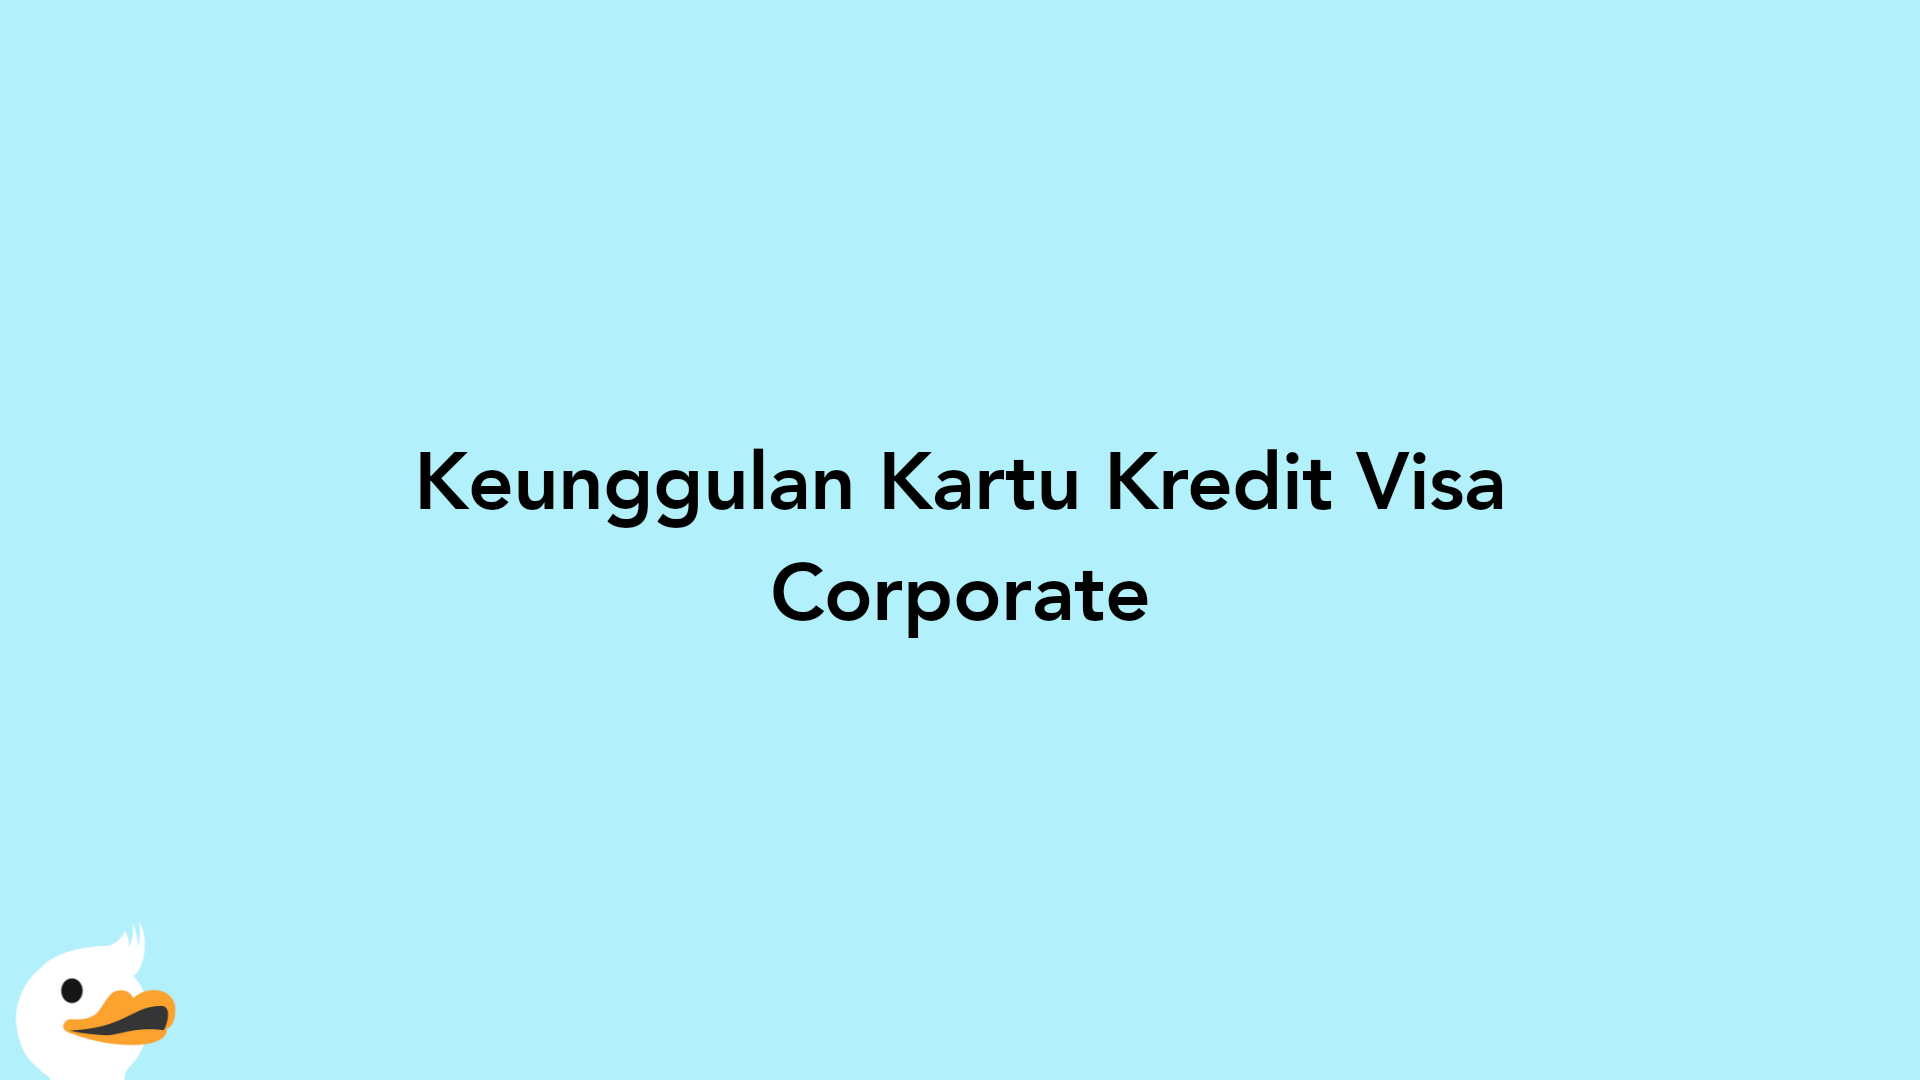 Keunggulan Kartu Kredit Visa Corporate